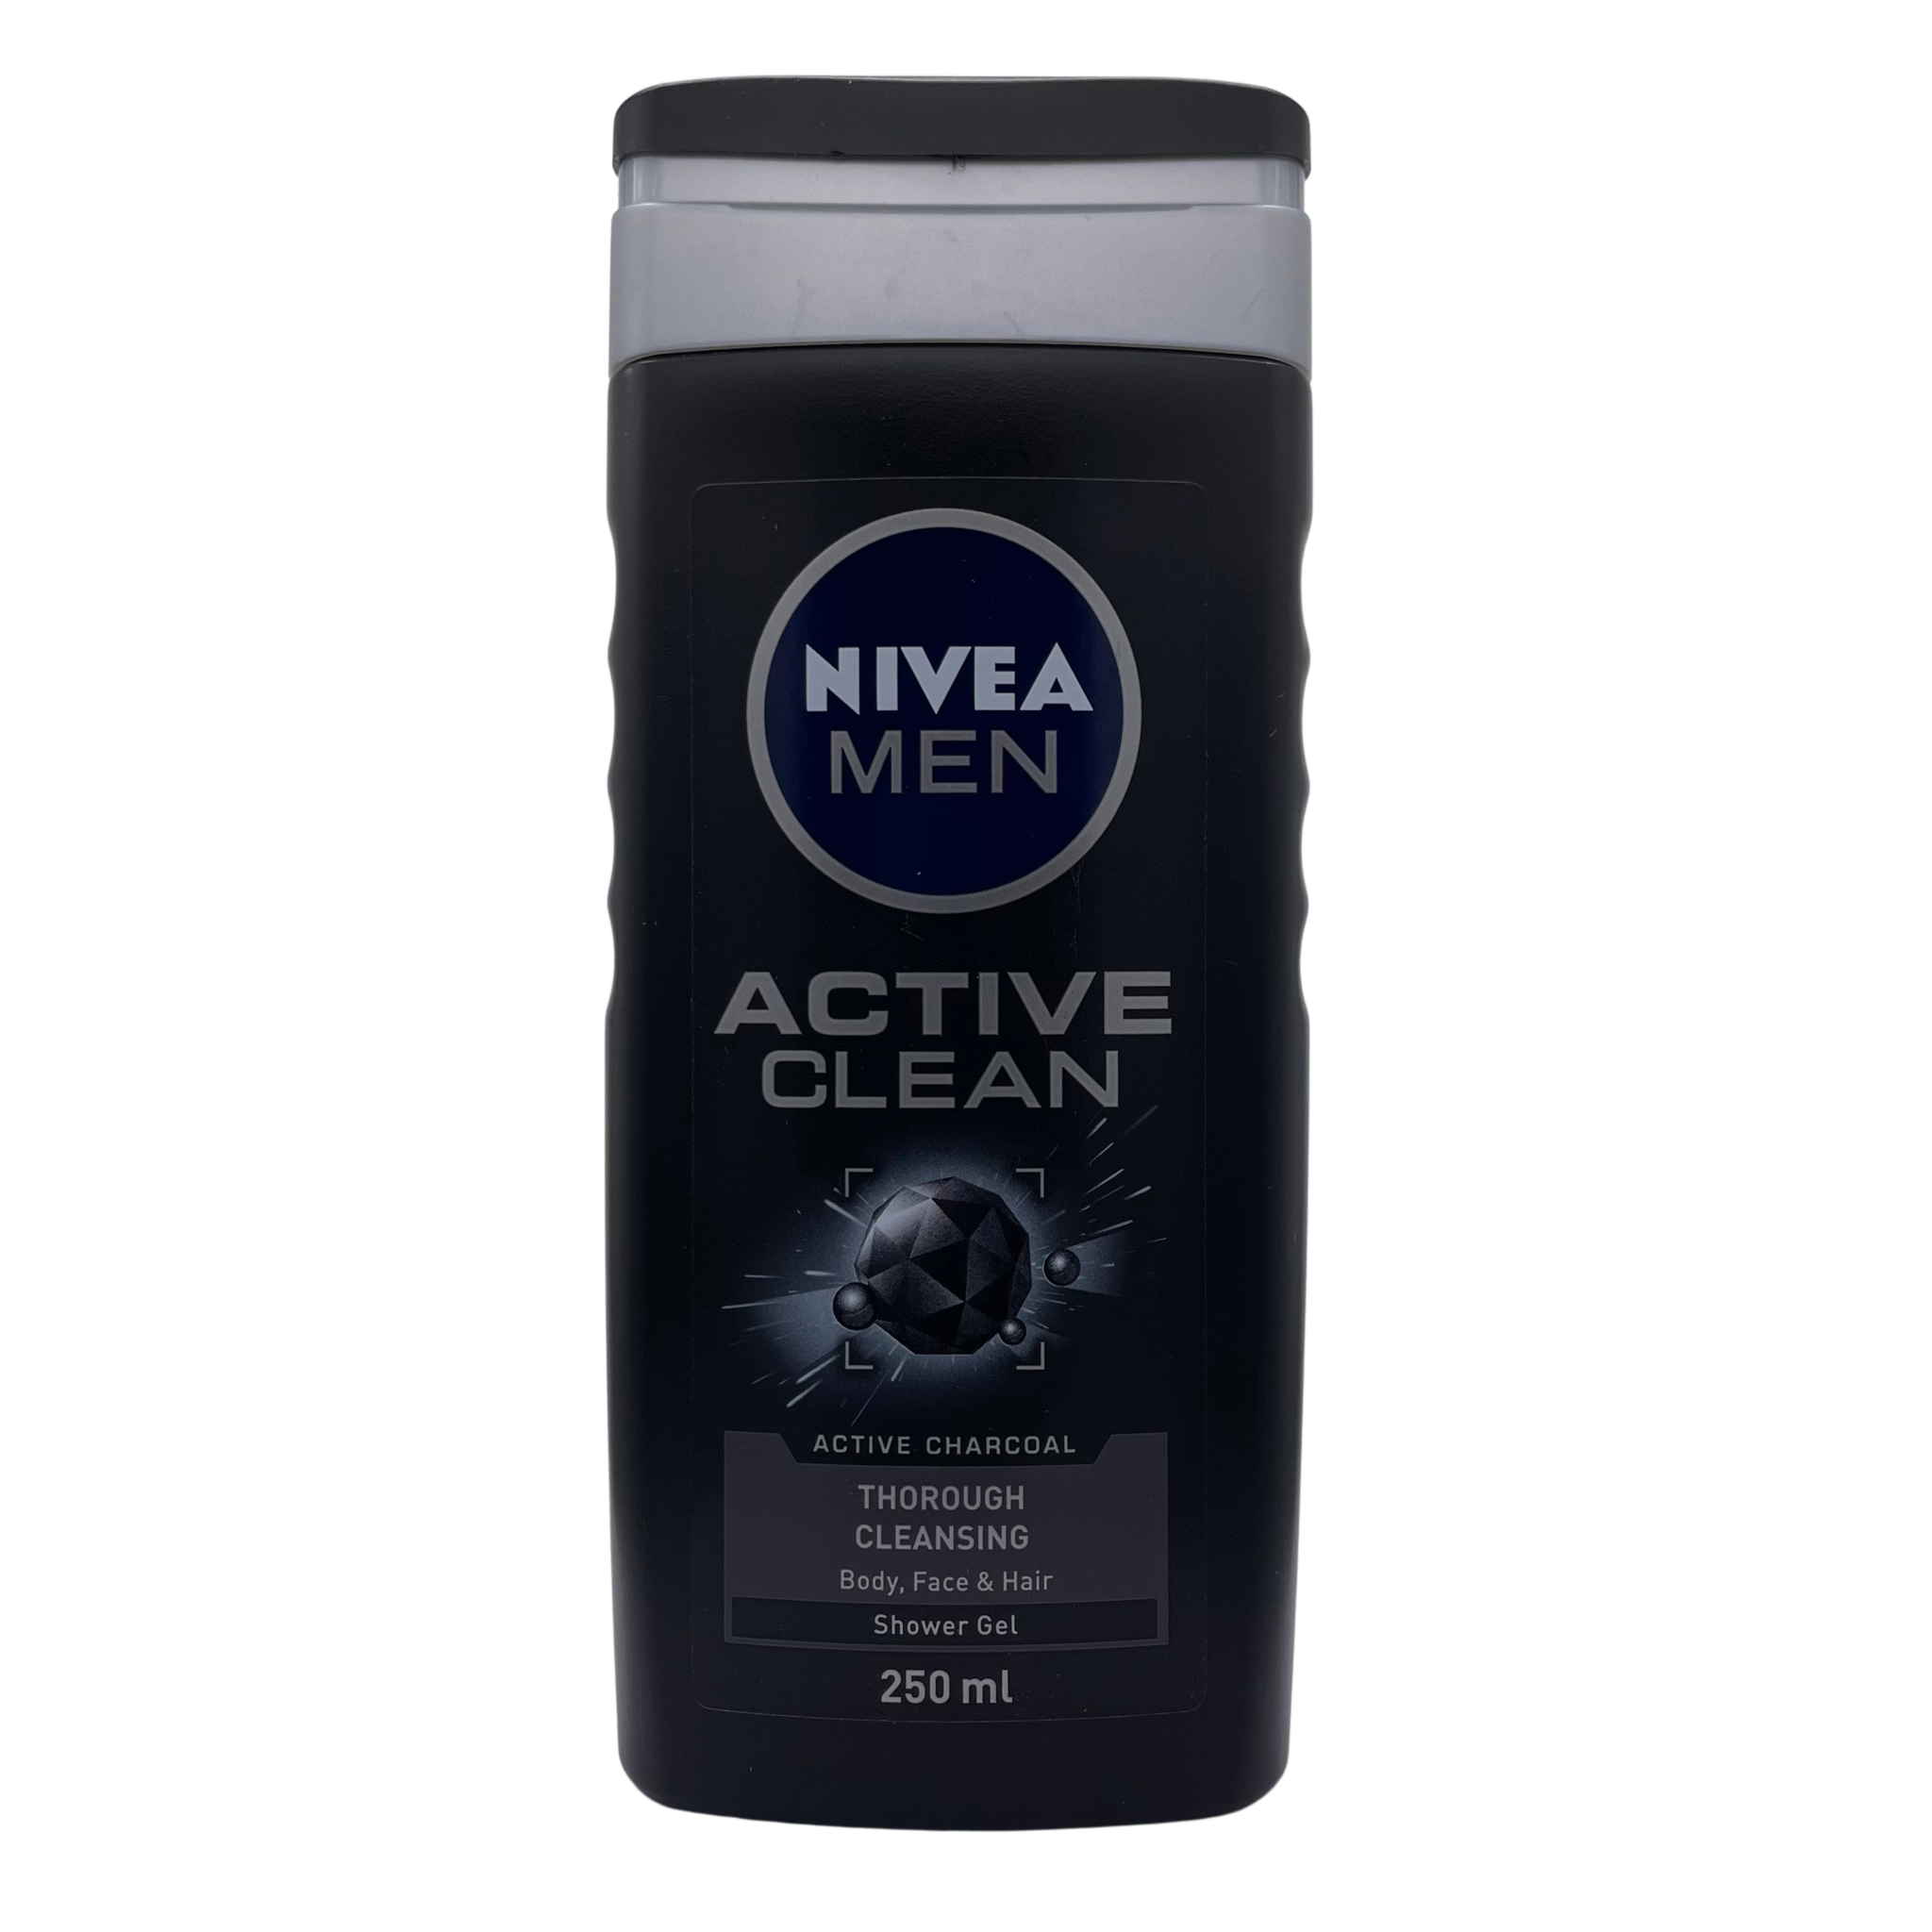 Nivea Men Active Clean showergel 250ml